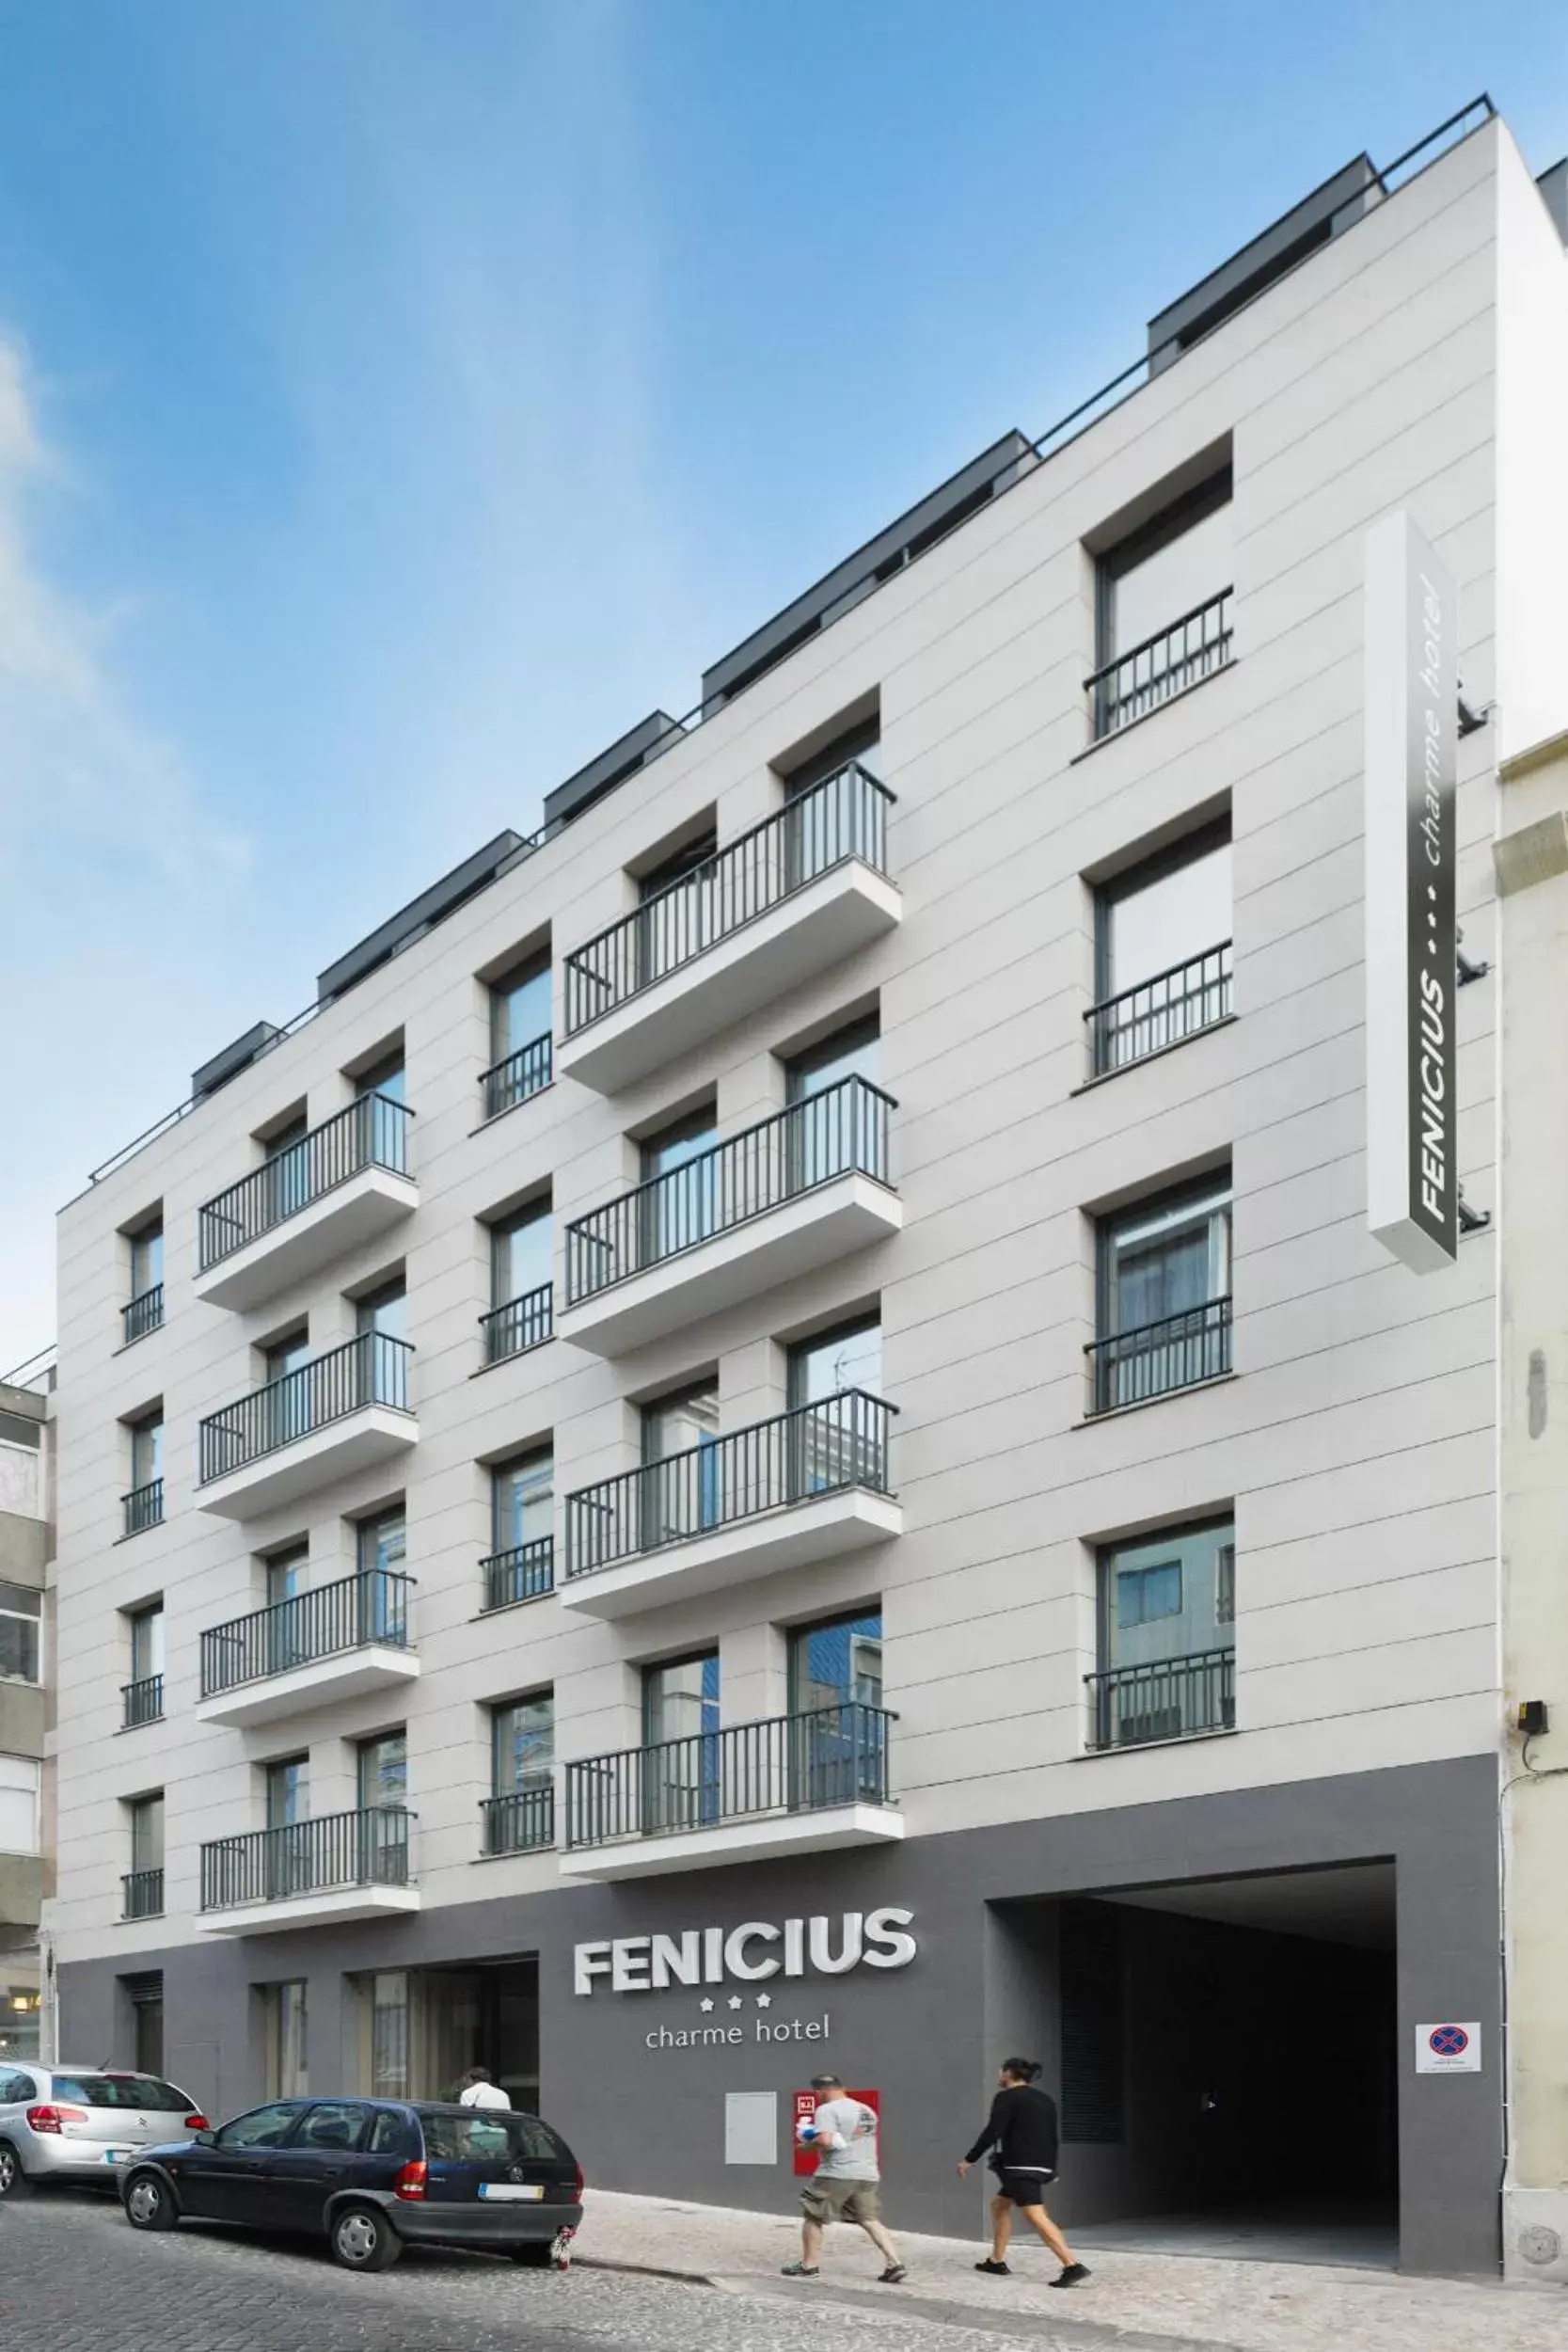 Property building, Facade/Entrance in Fenicius Charme Hotel